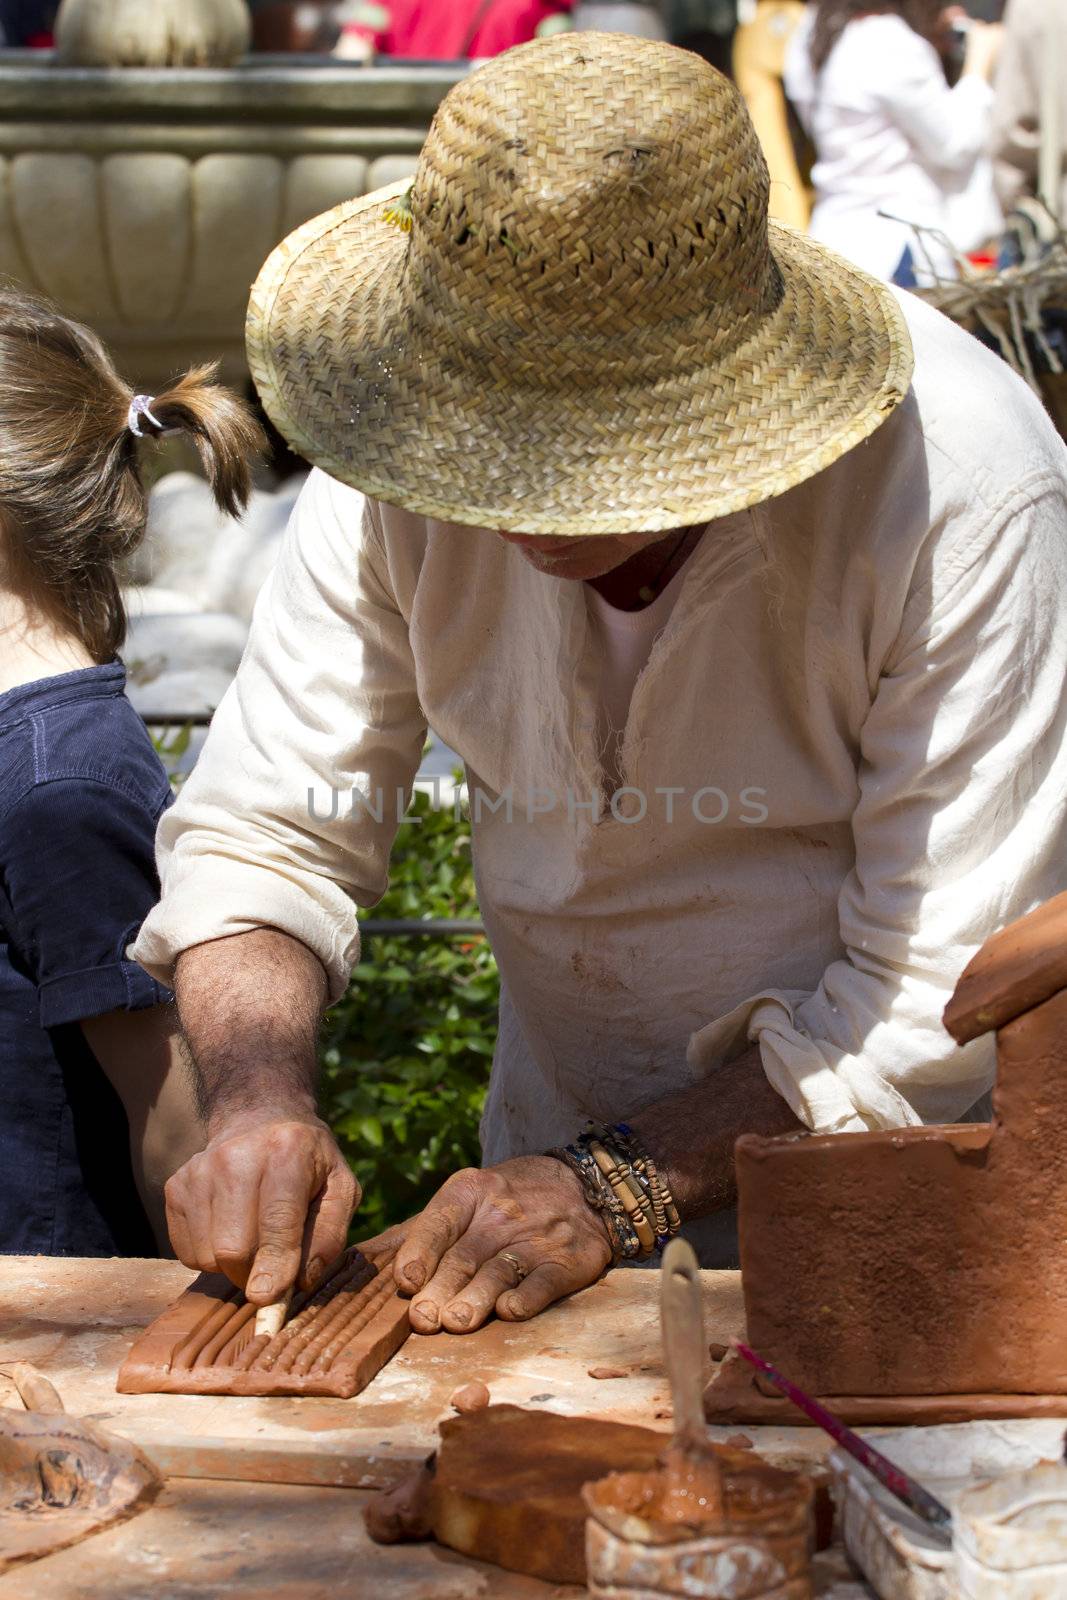 Men at work, clay craftsman by FernandoCortes